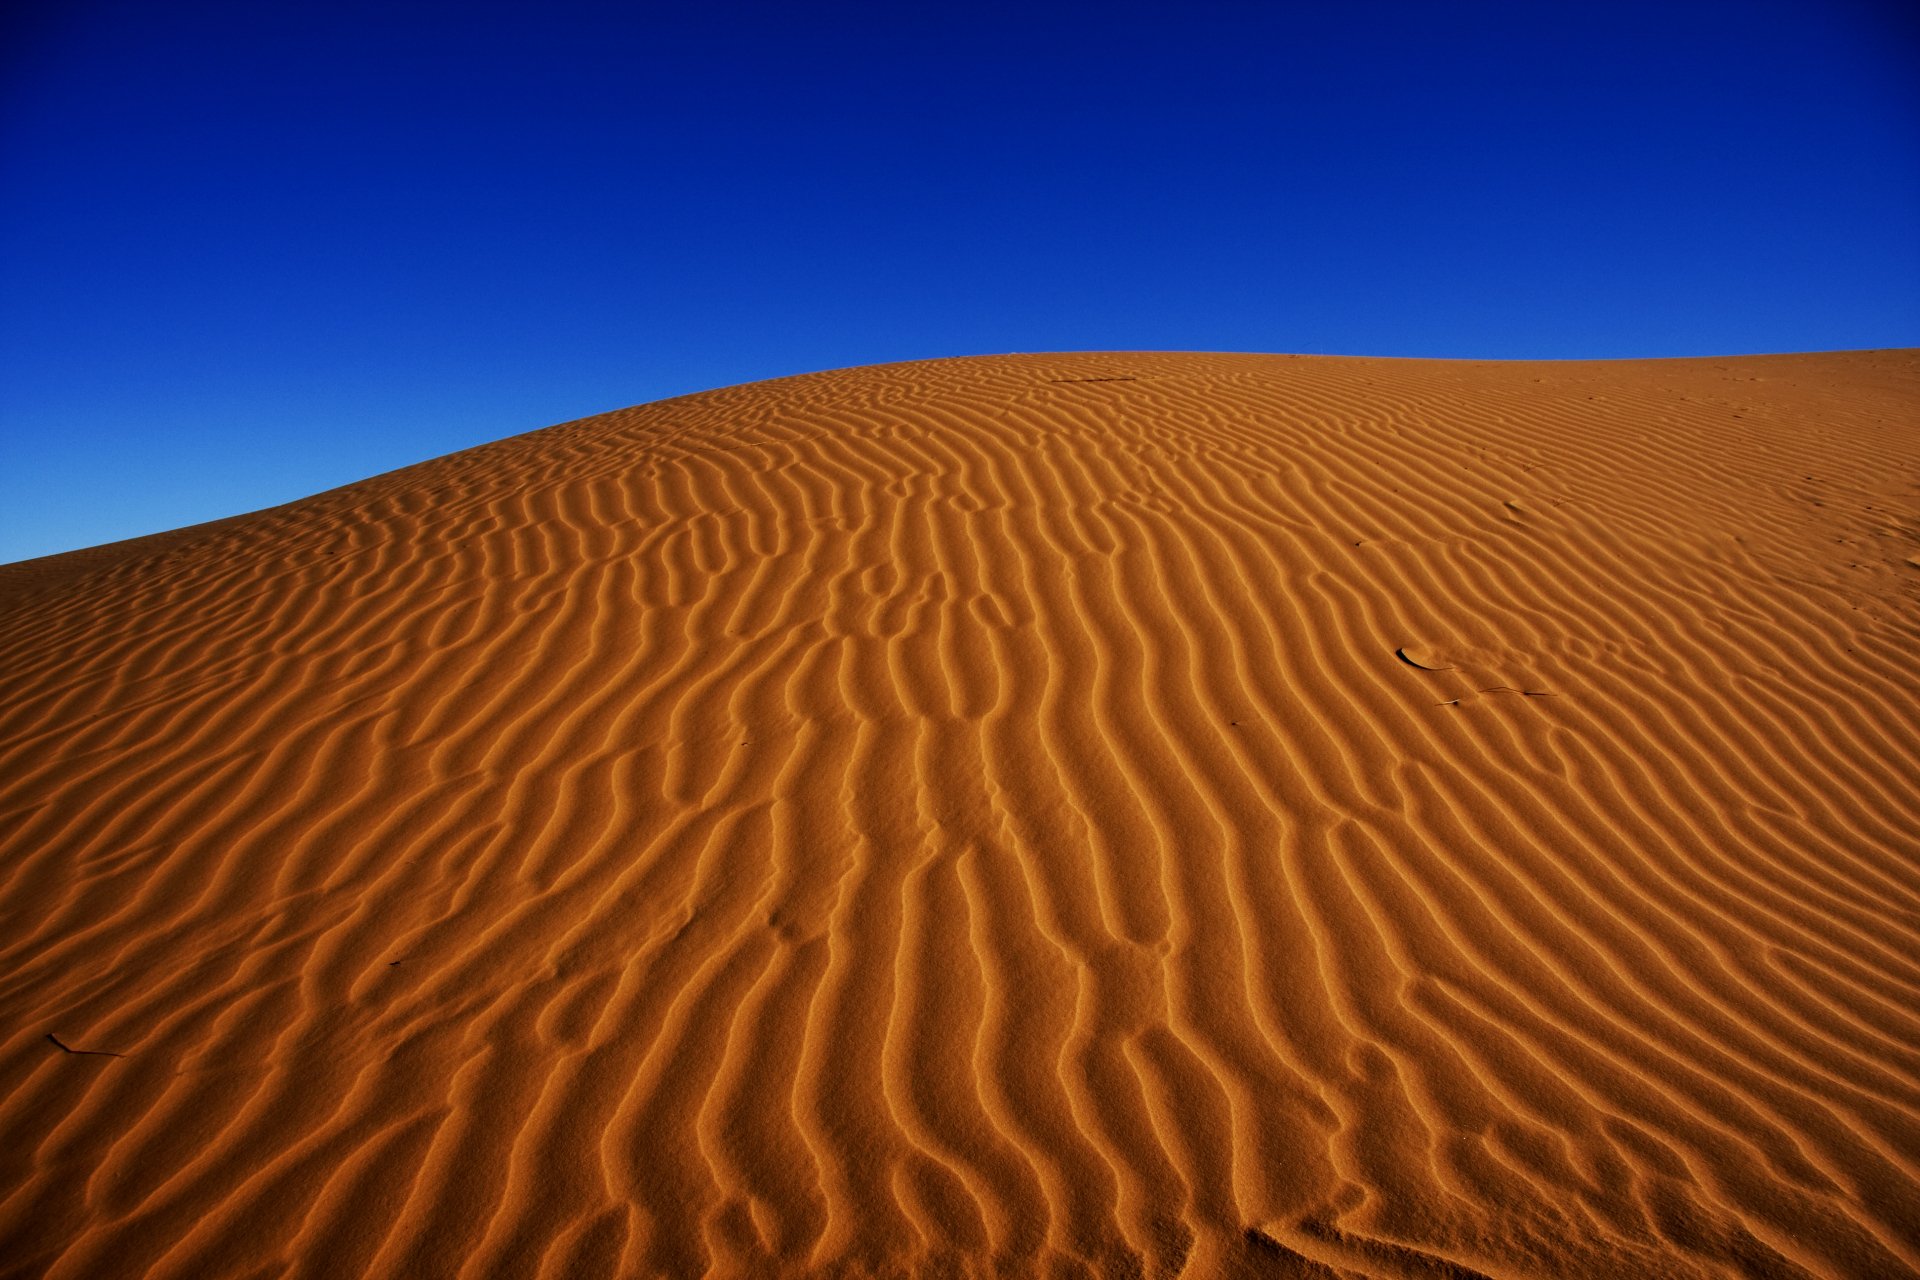  Sand  dunes 4k  Ultra HD Wallpaper  Background Image 